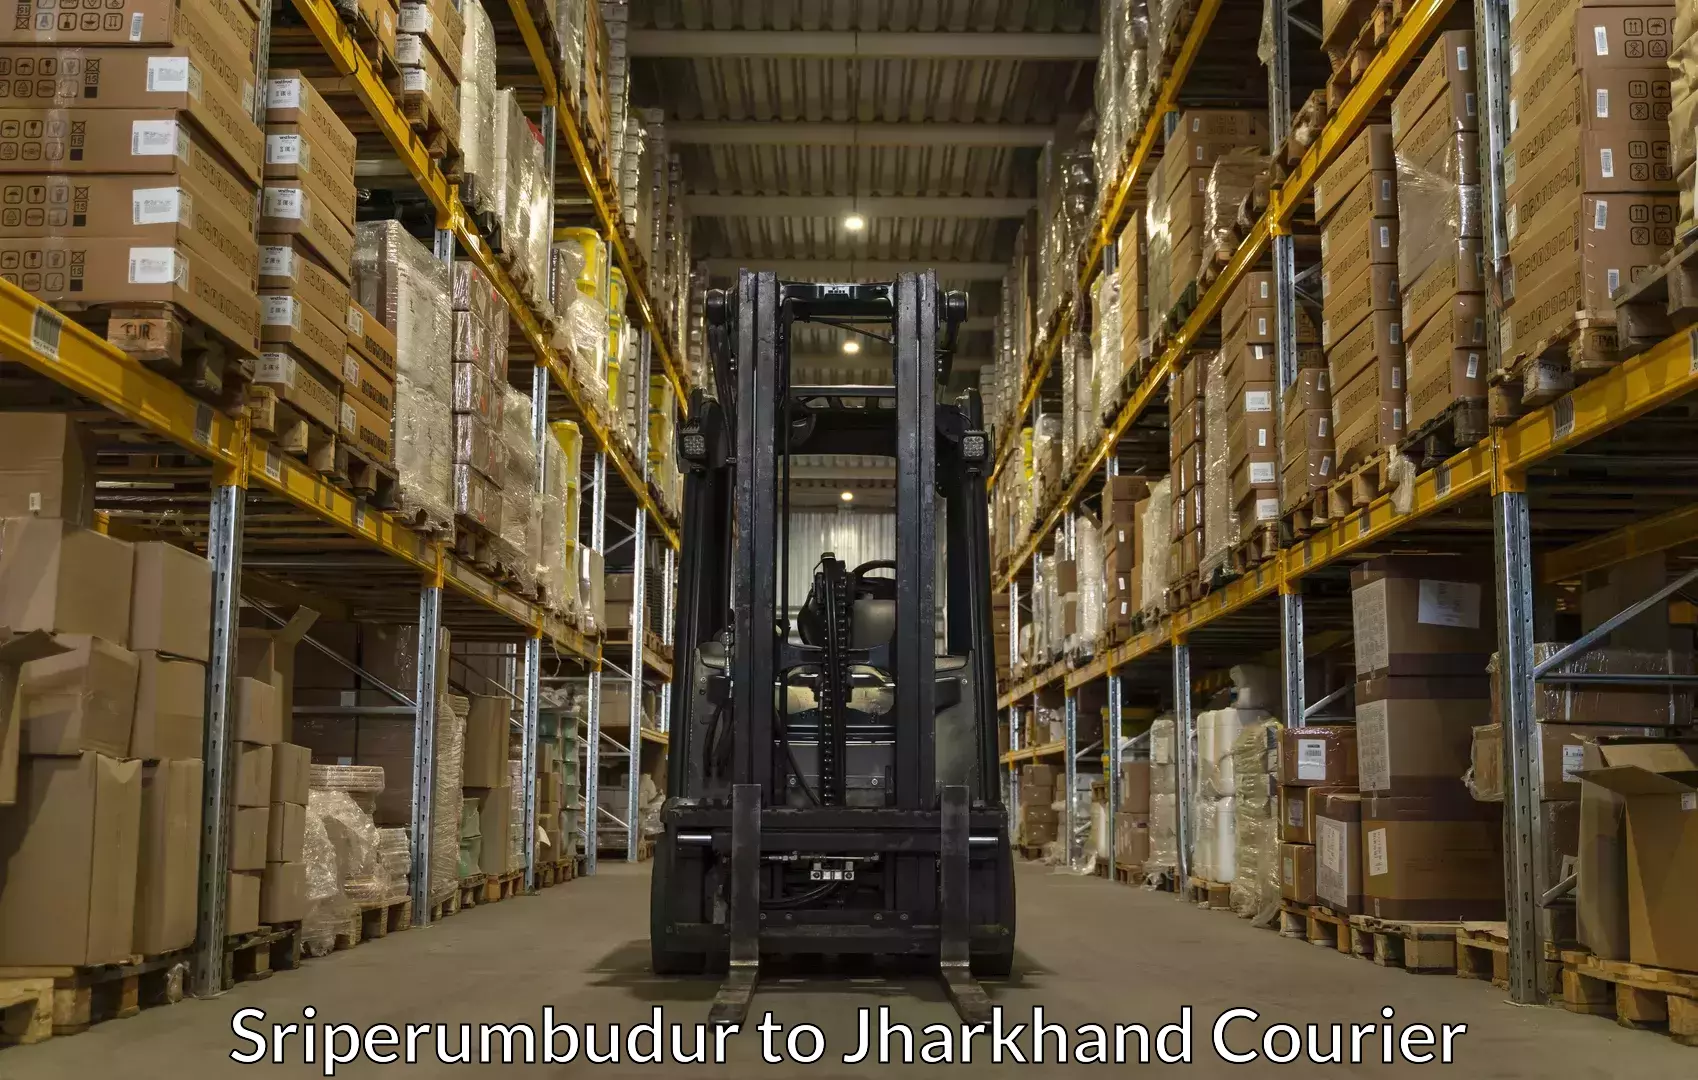 Luggage transport consultancy Sriperumbudur to Domchanch